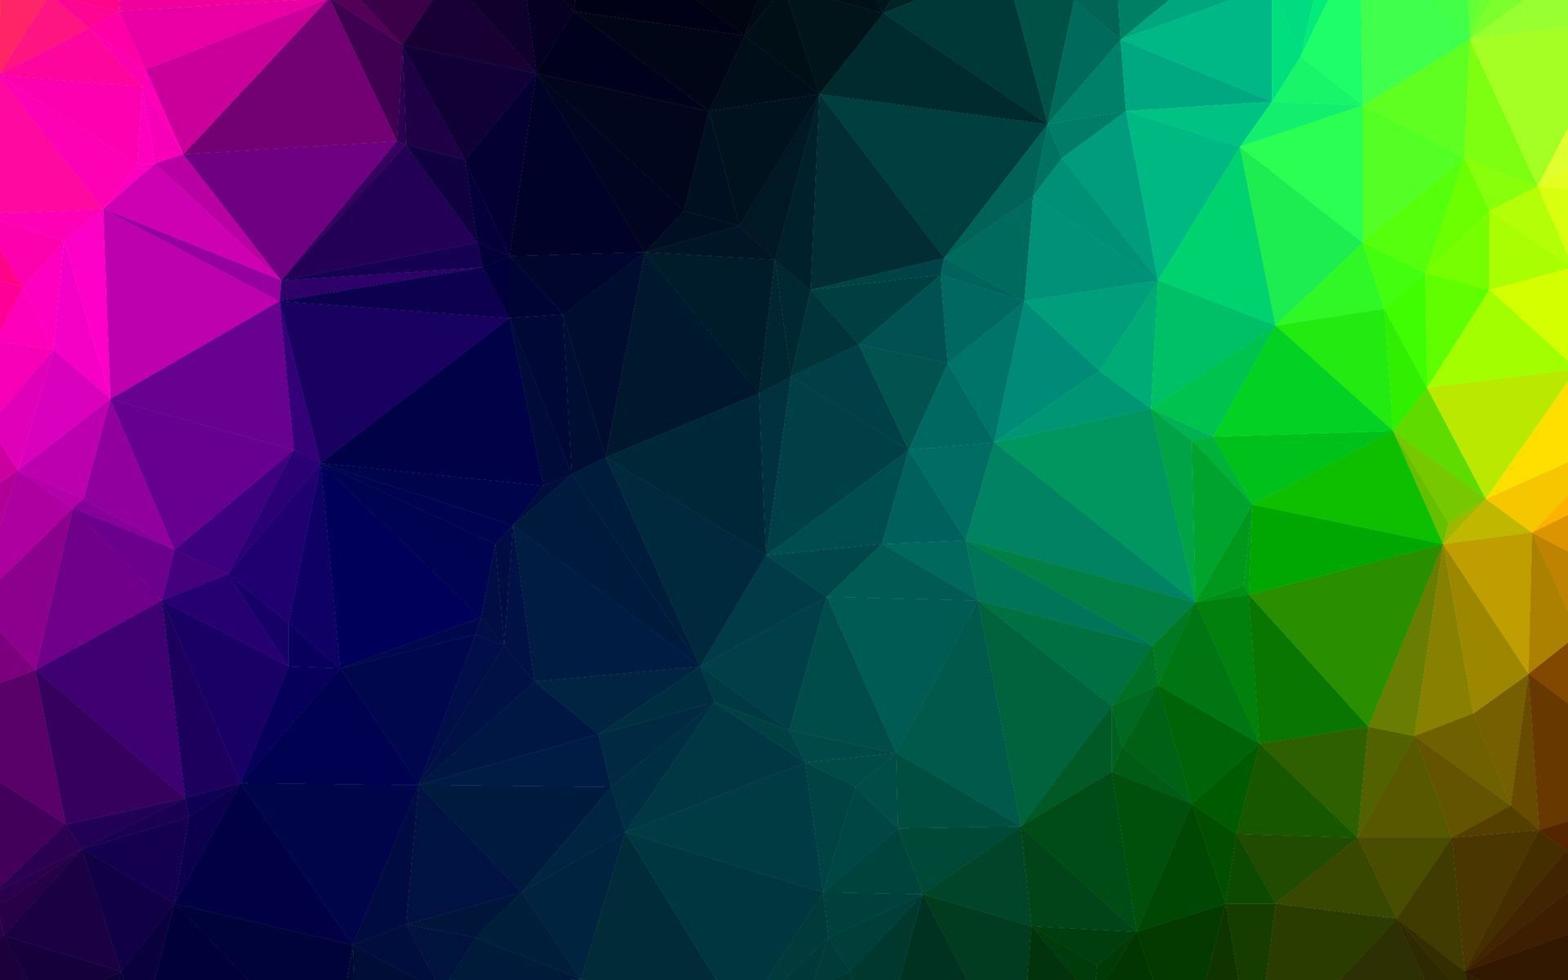 modelo de mosaico de triângulo de vetor de arco-íris multicolorido escuro.